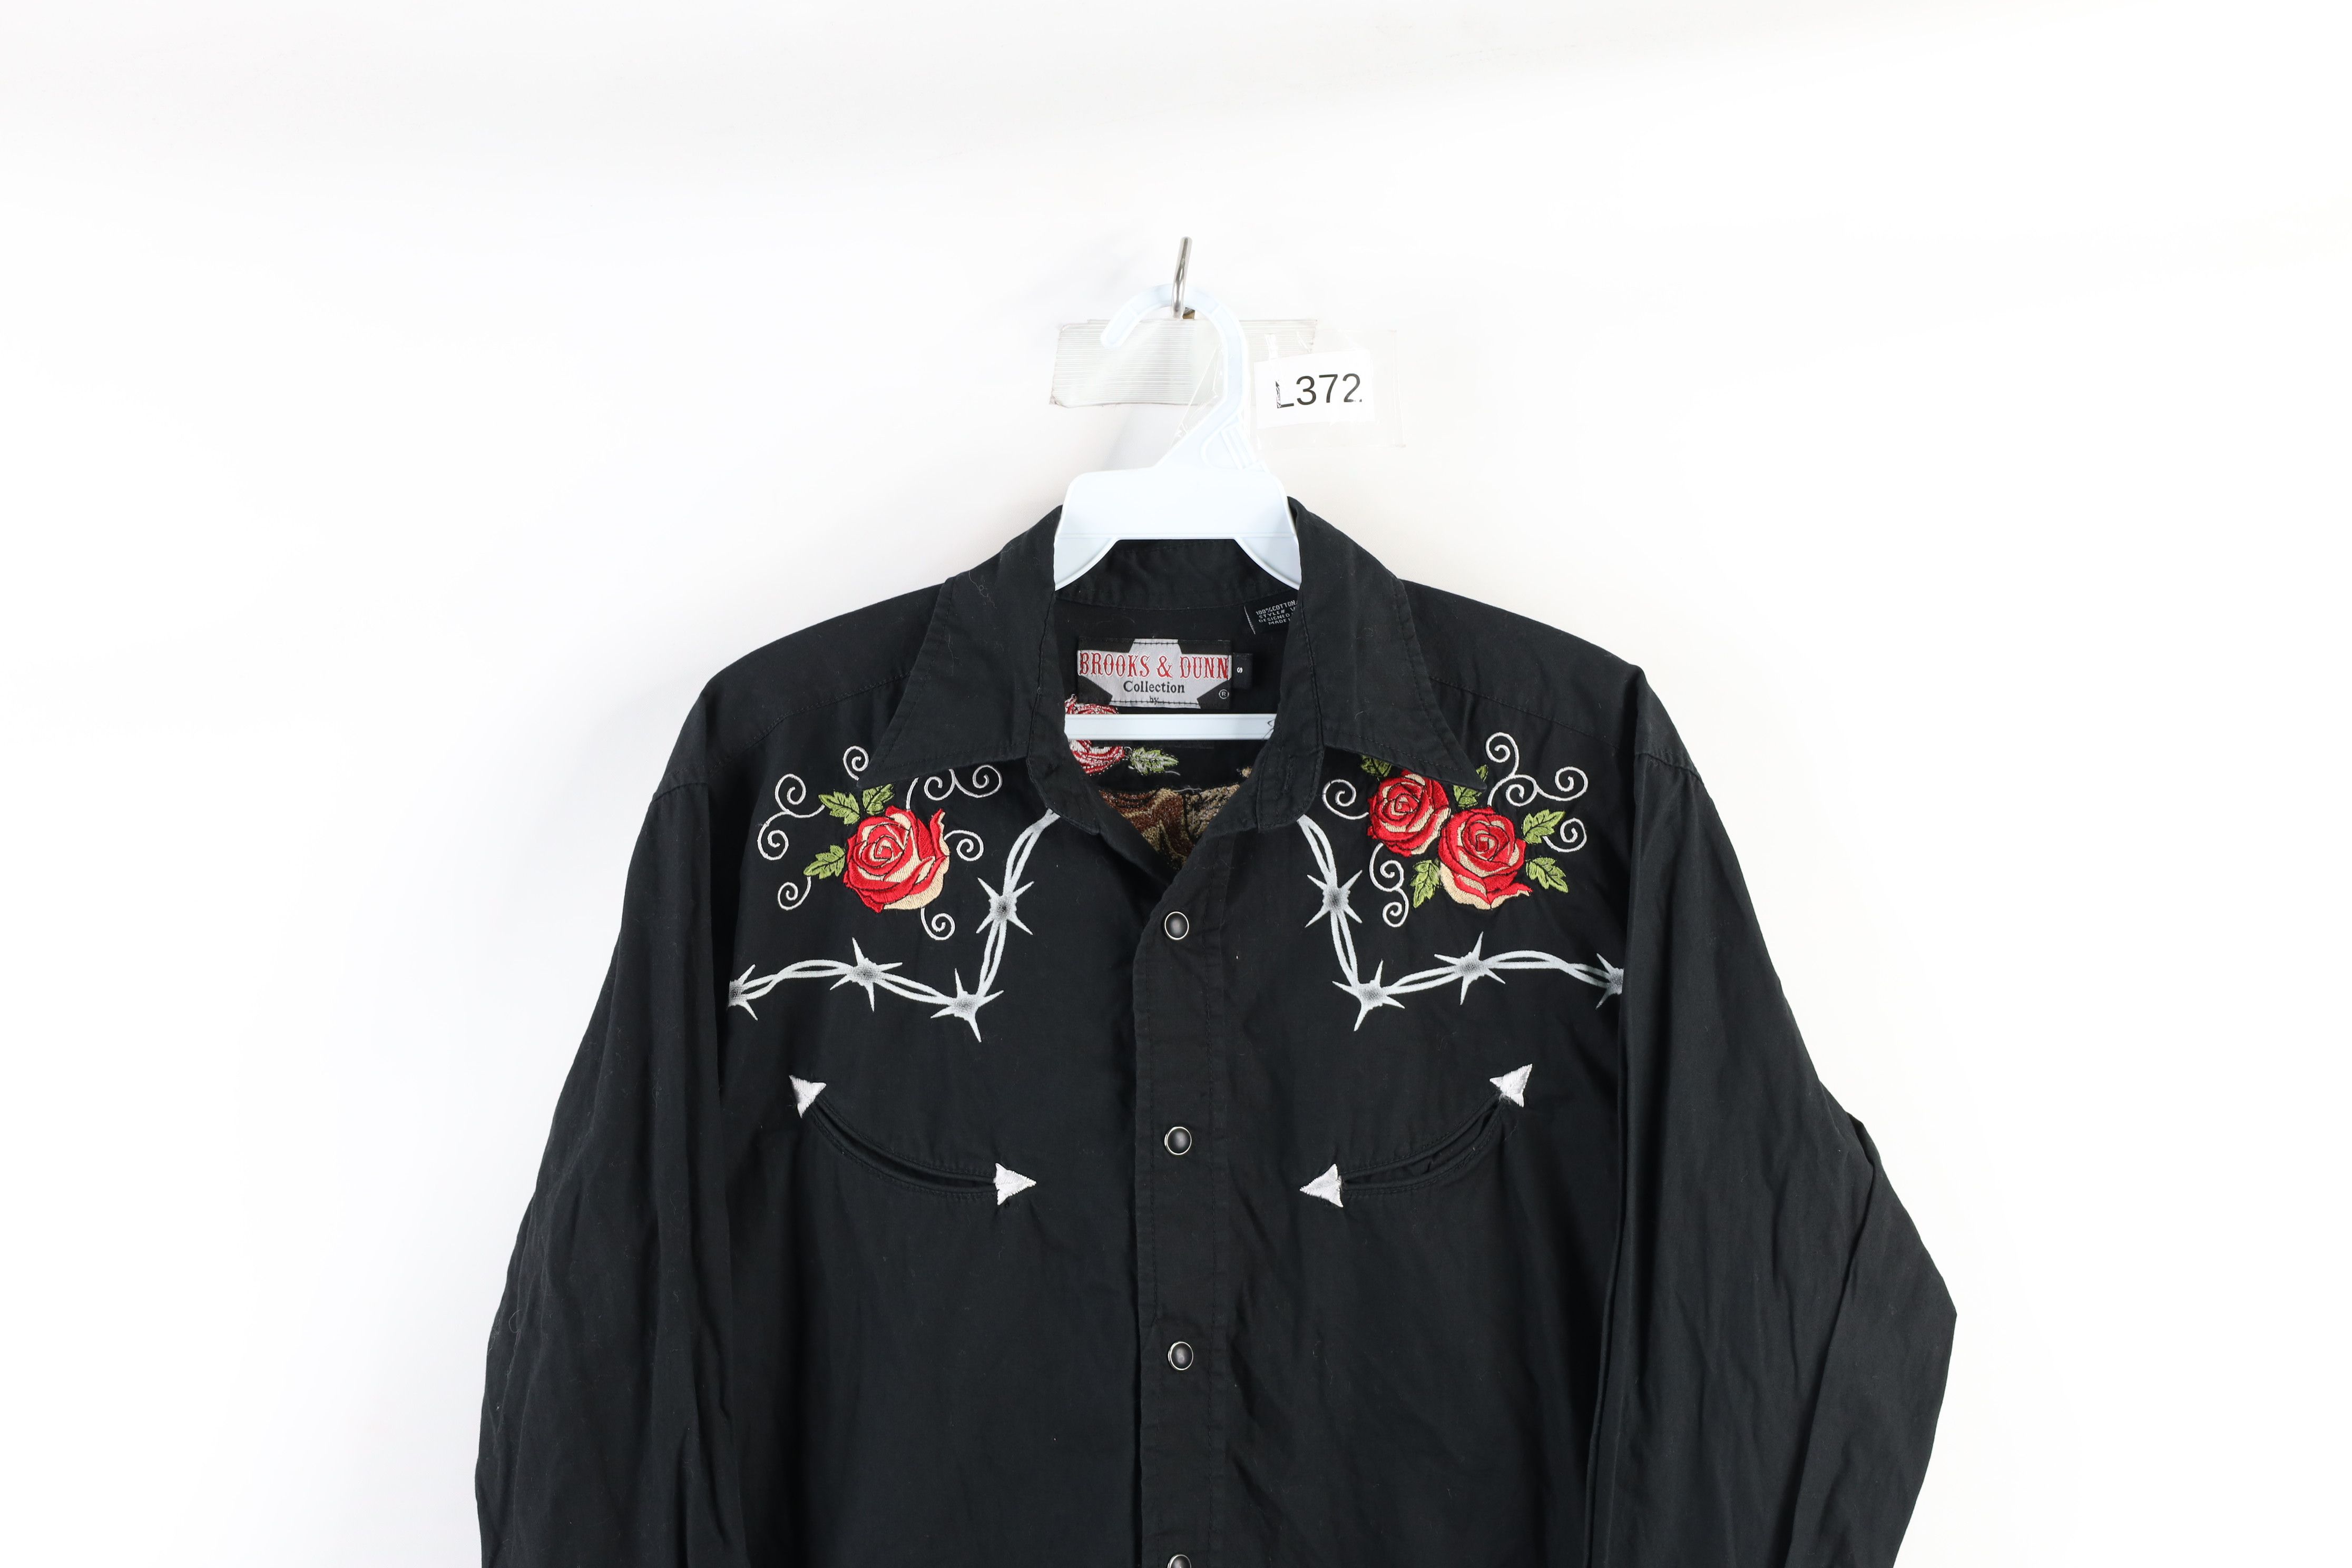 Vintage Vintage Rockabilly Rose Skull Snap Button Shirt Black Size US S / EU 44-46 / 1 - 2 Preview